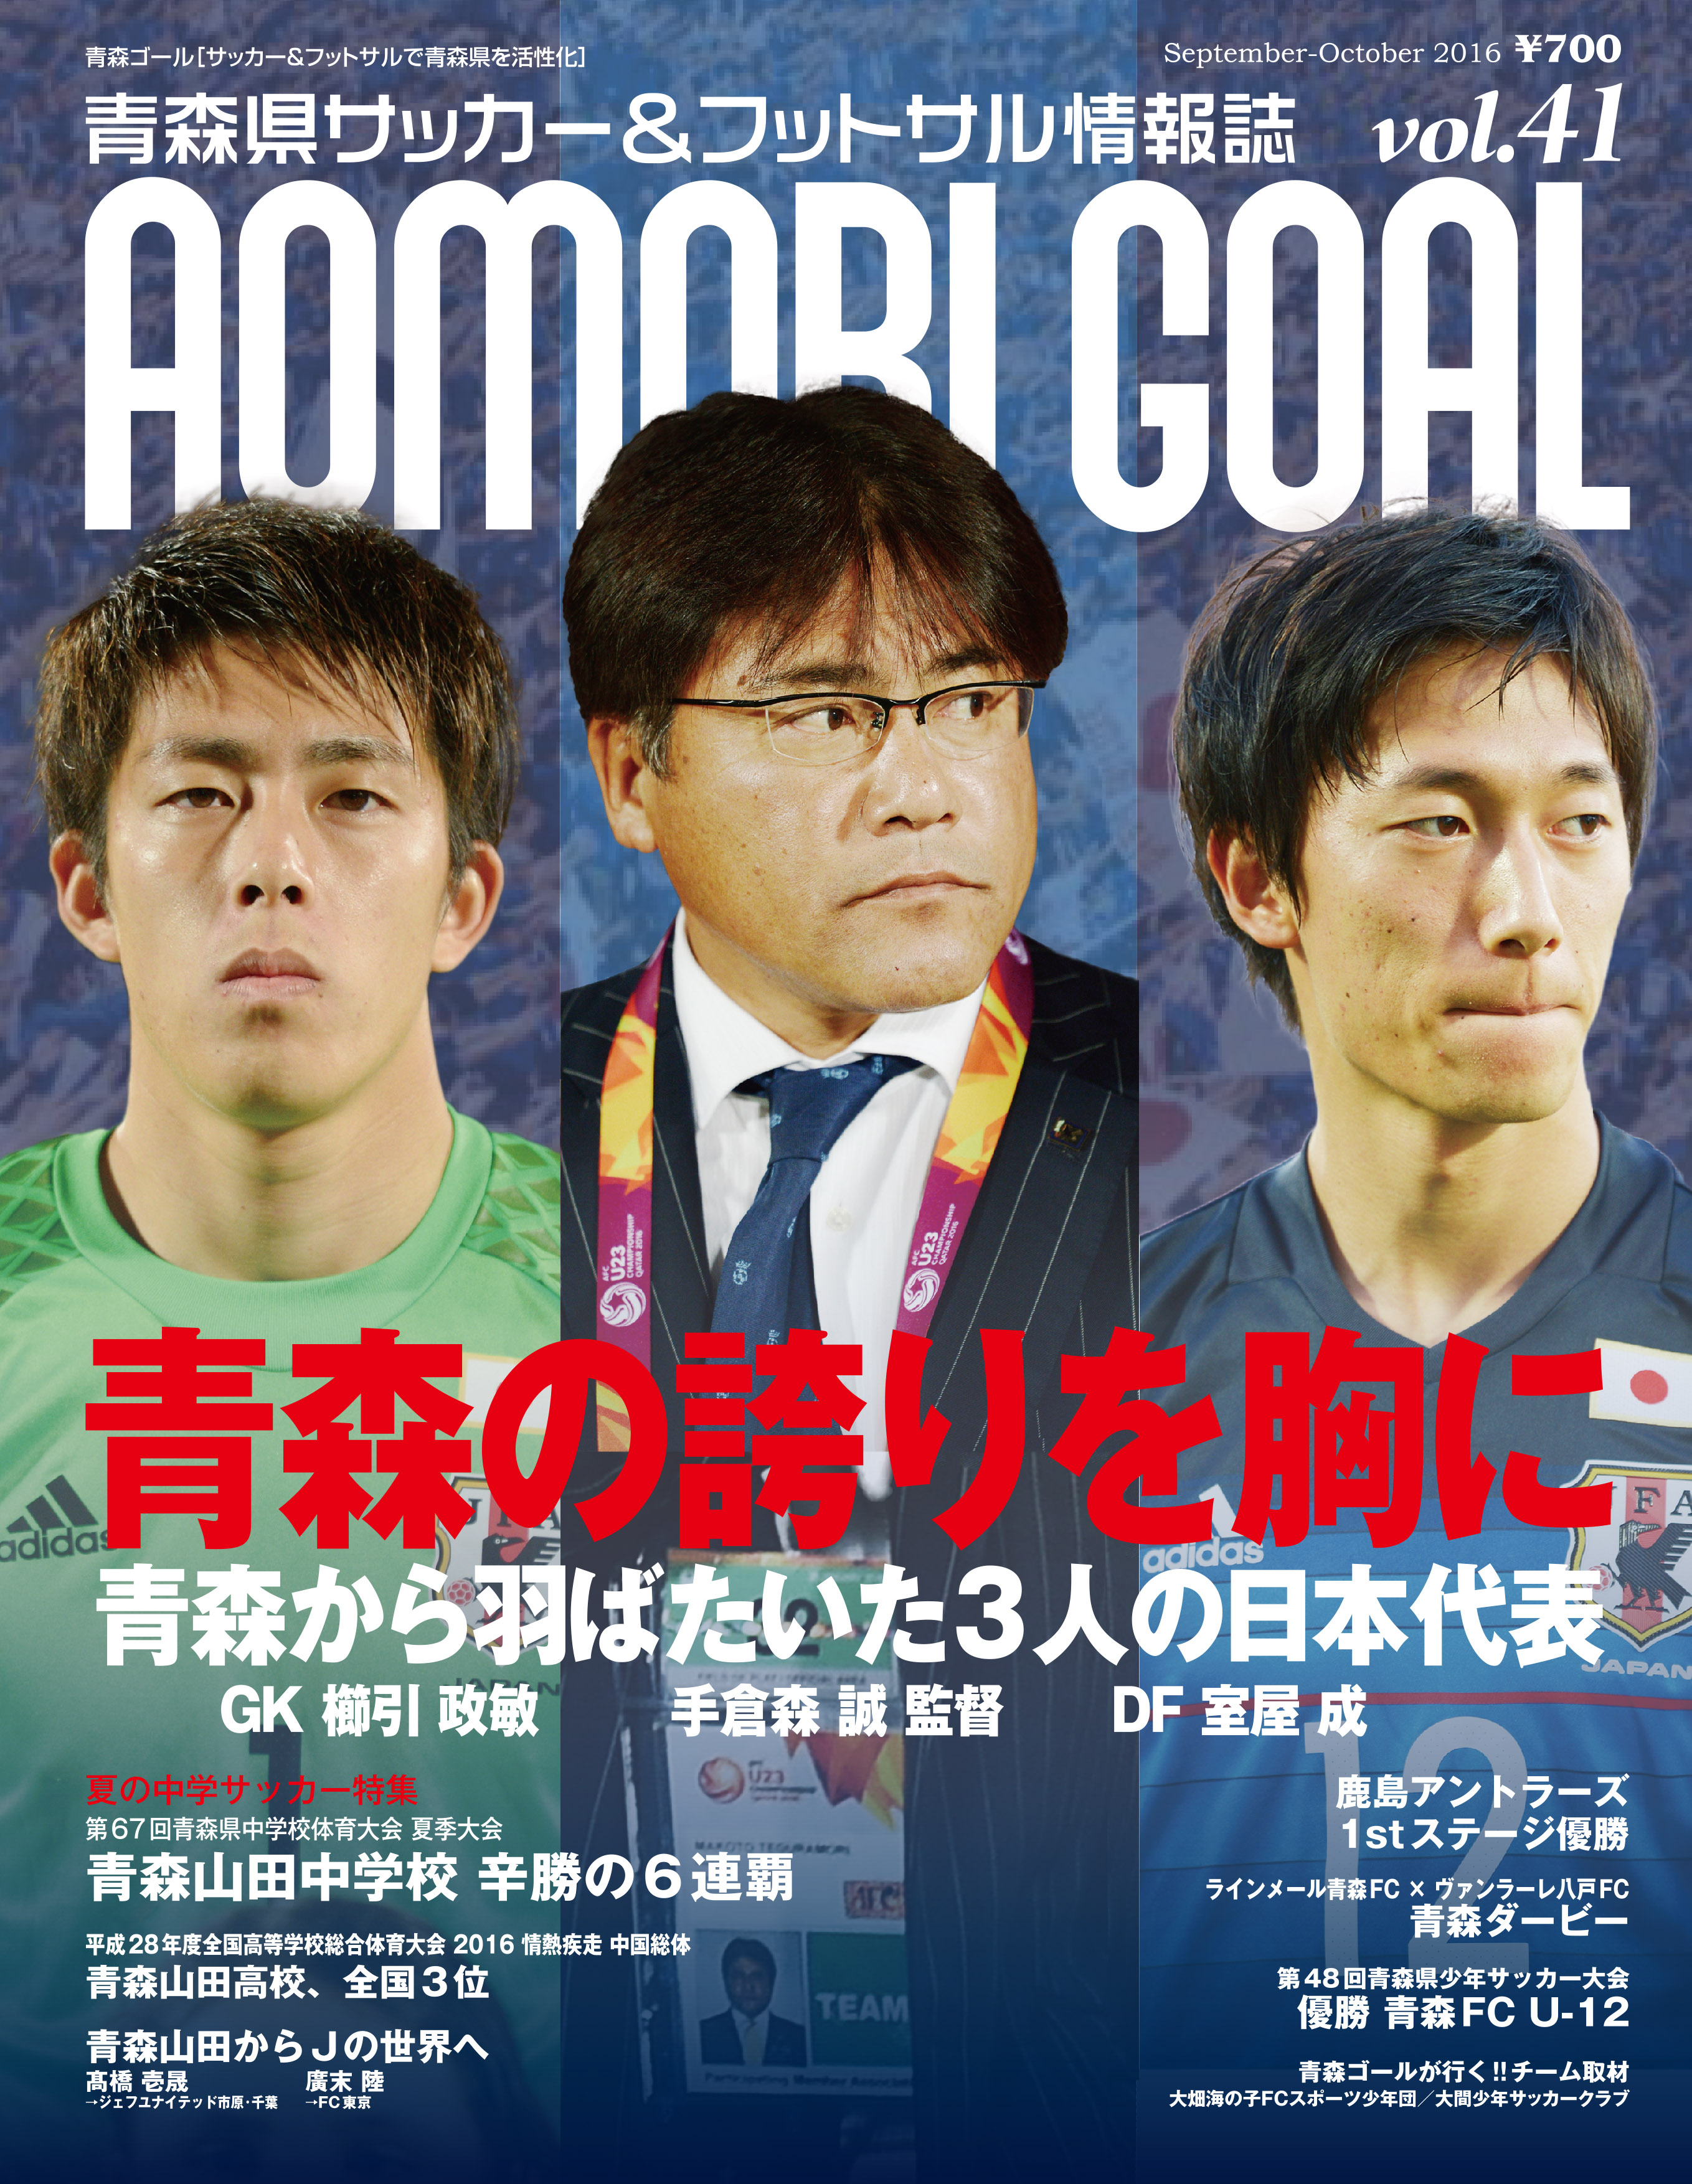 Aomori Goal Vol 41 バックナンバー 青森ゴール Aomori Goal 青森県サッカー フットサルマガジン